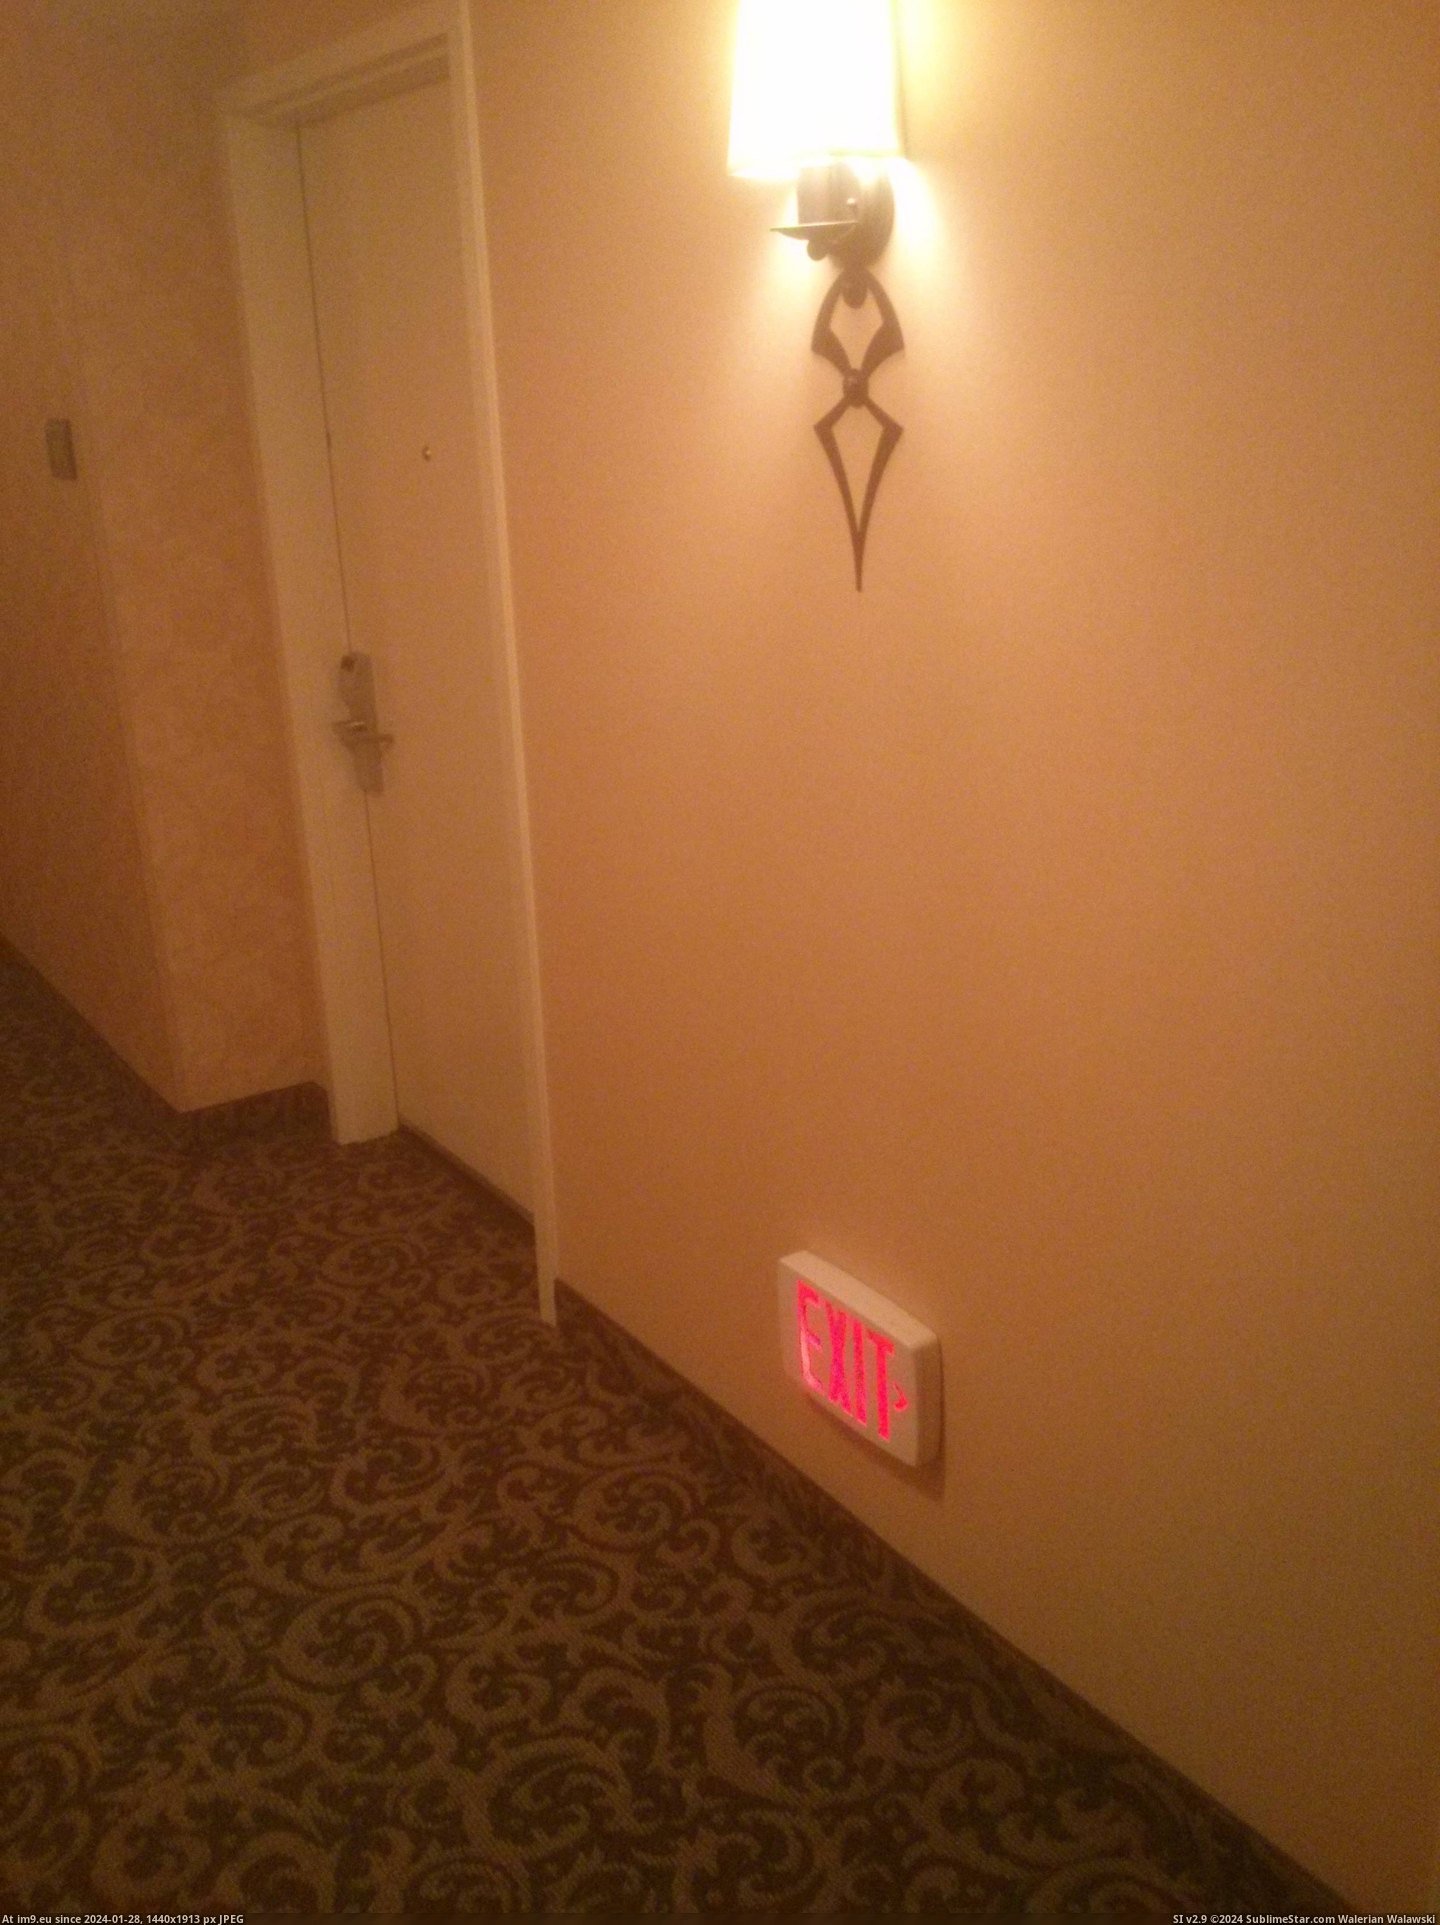 #Hotel #Hallway #Exit #Floor [Mildlyinteresting] Found an exit sign near the floor of a hotel hallway Pic. (Bild von album My r/MILDLYINTERESTING favs))